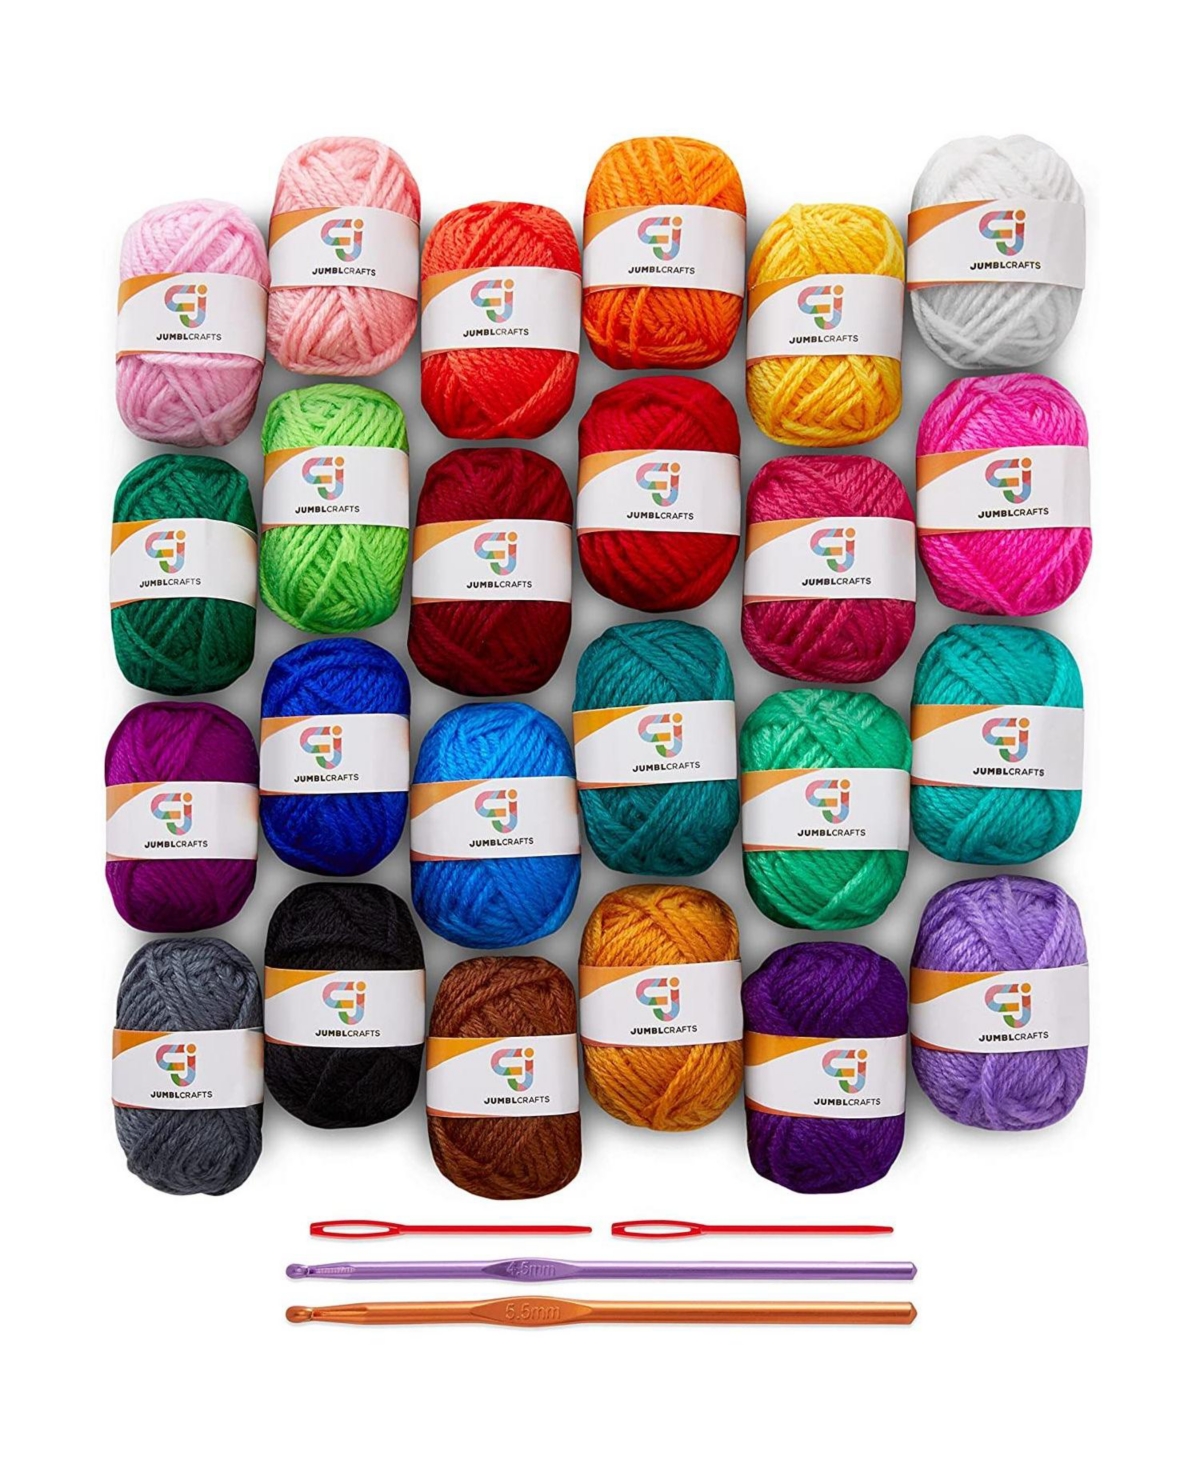 JumblCrafts 24 Piece Yarn Crochet Kit & Knitting Set w/Crochet Accessories - Multi-color